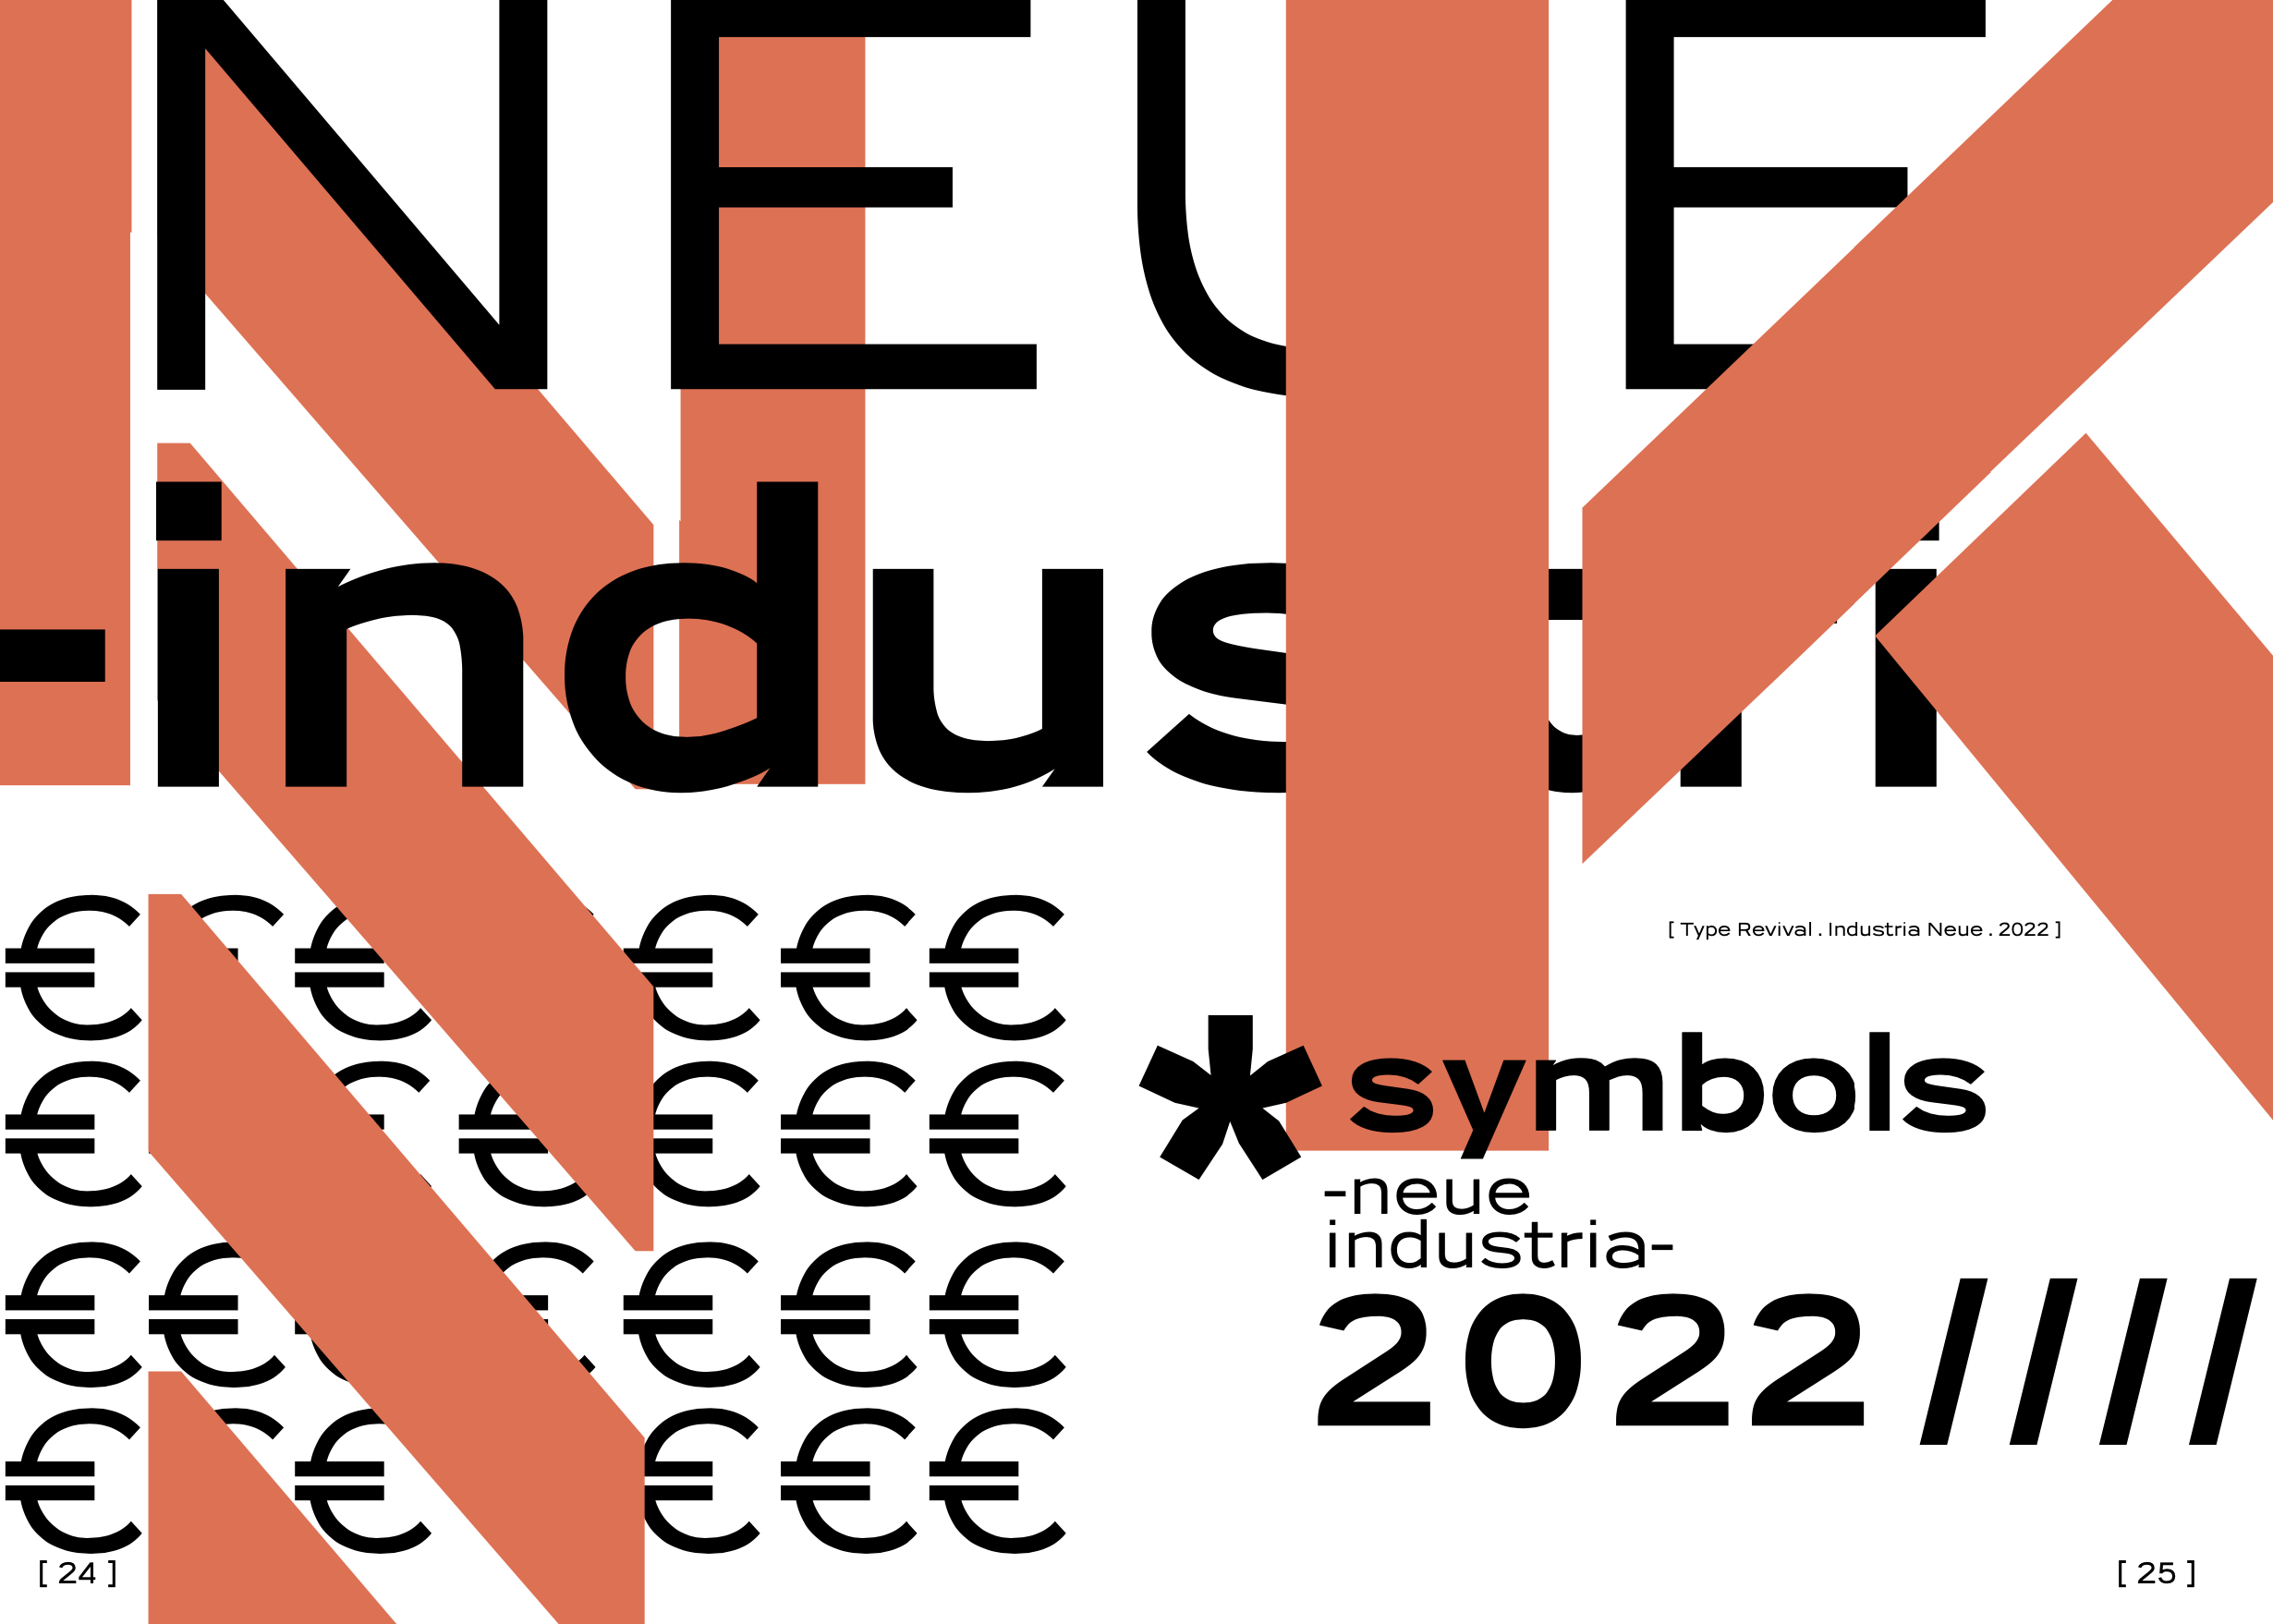 Industria Neue digital typeface revival developed by Inês Venâncio, Raquel Clemente, Sara Guerra for the Typeface Design course, in 2022.